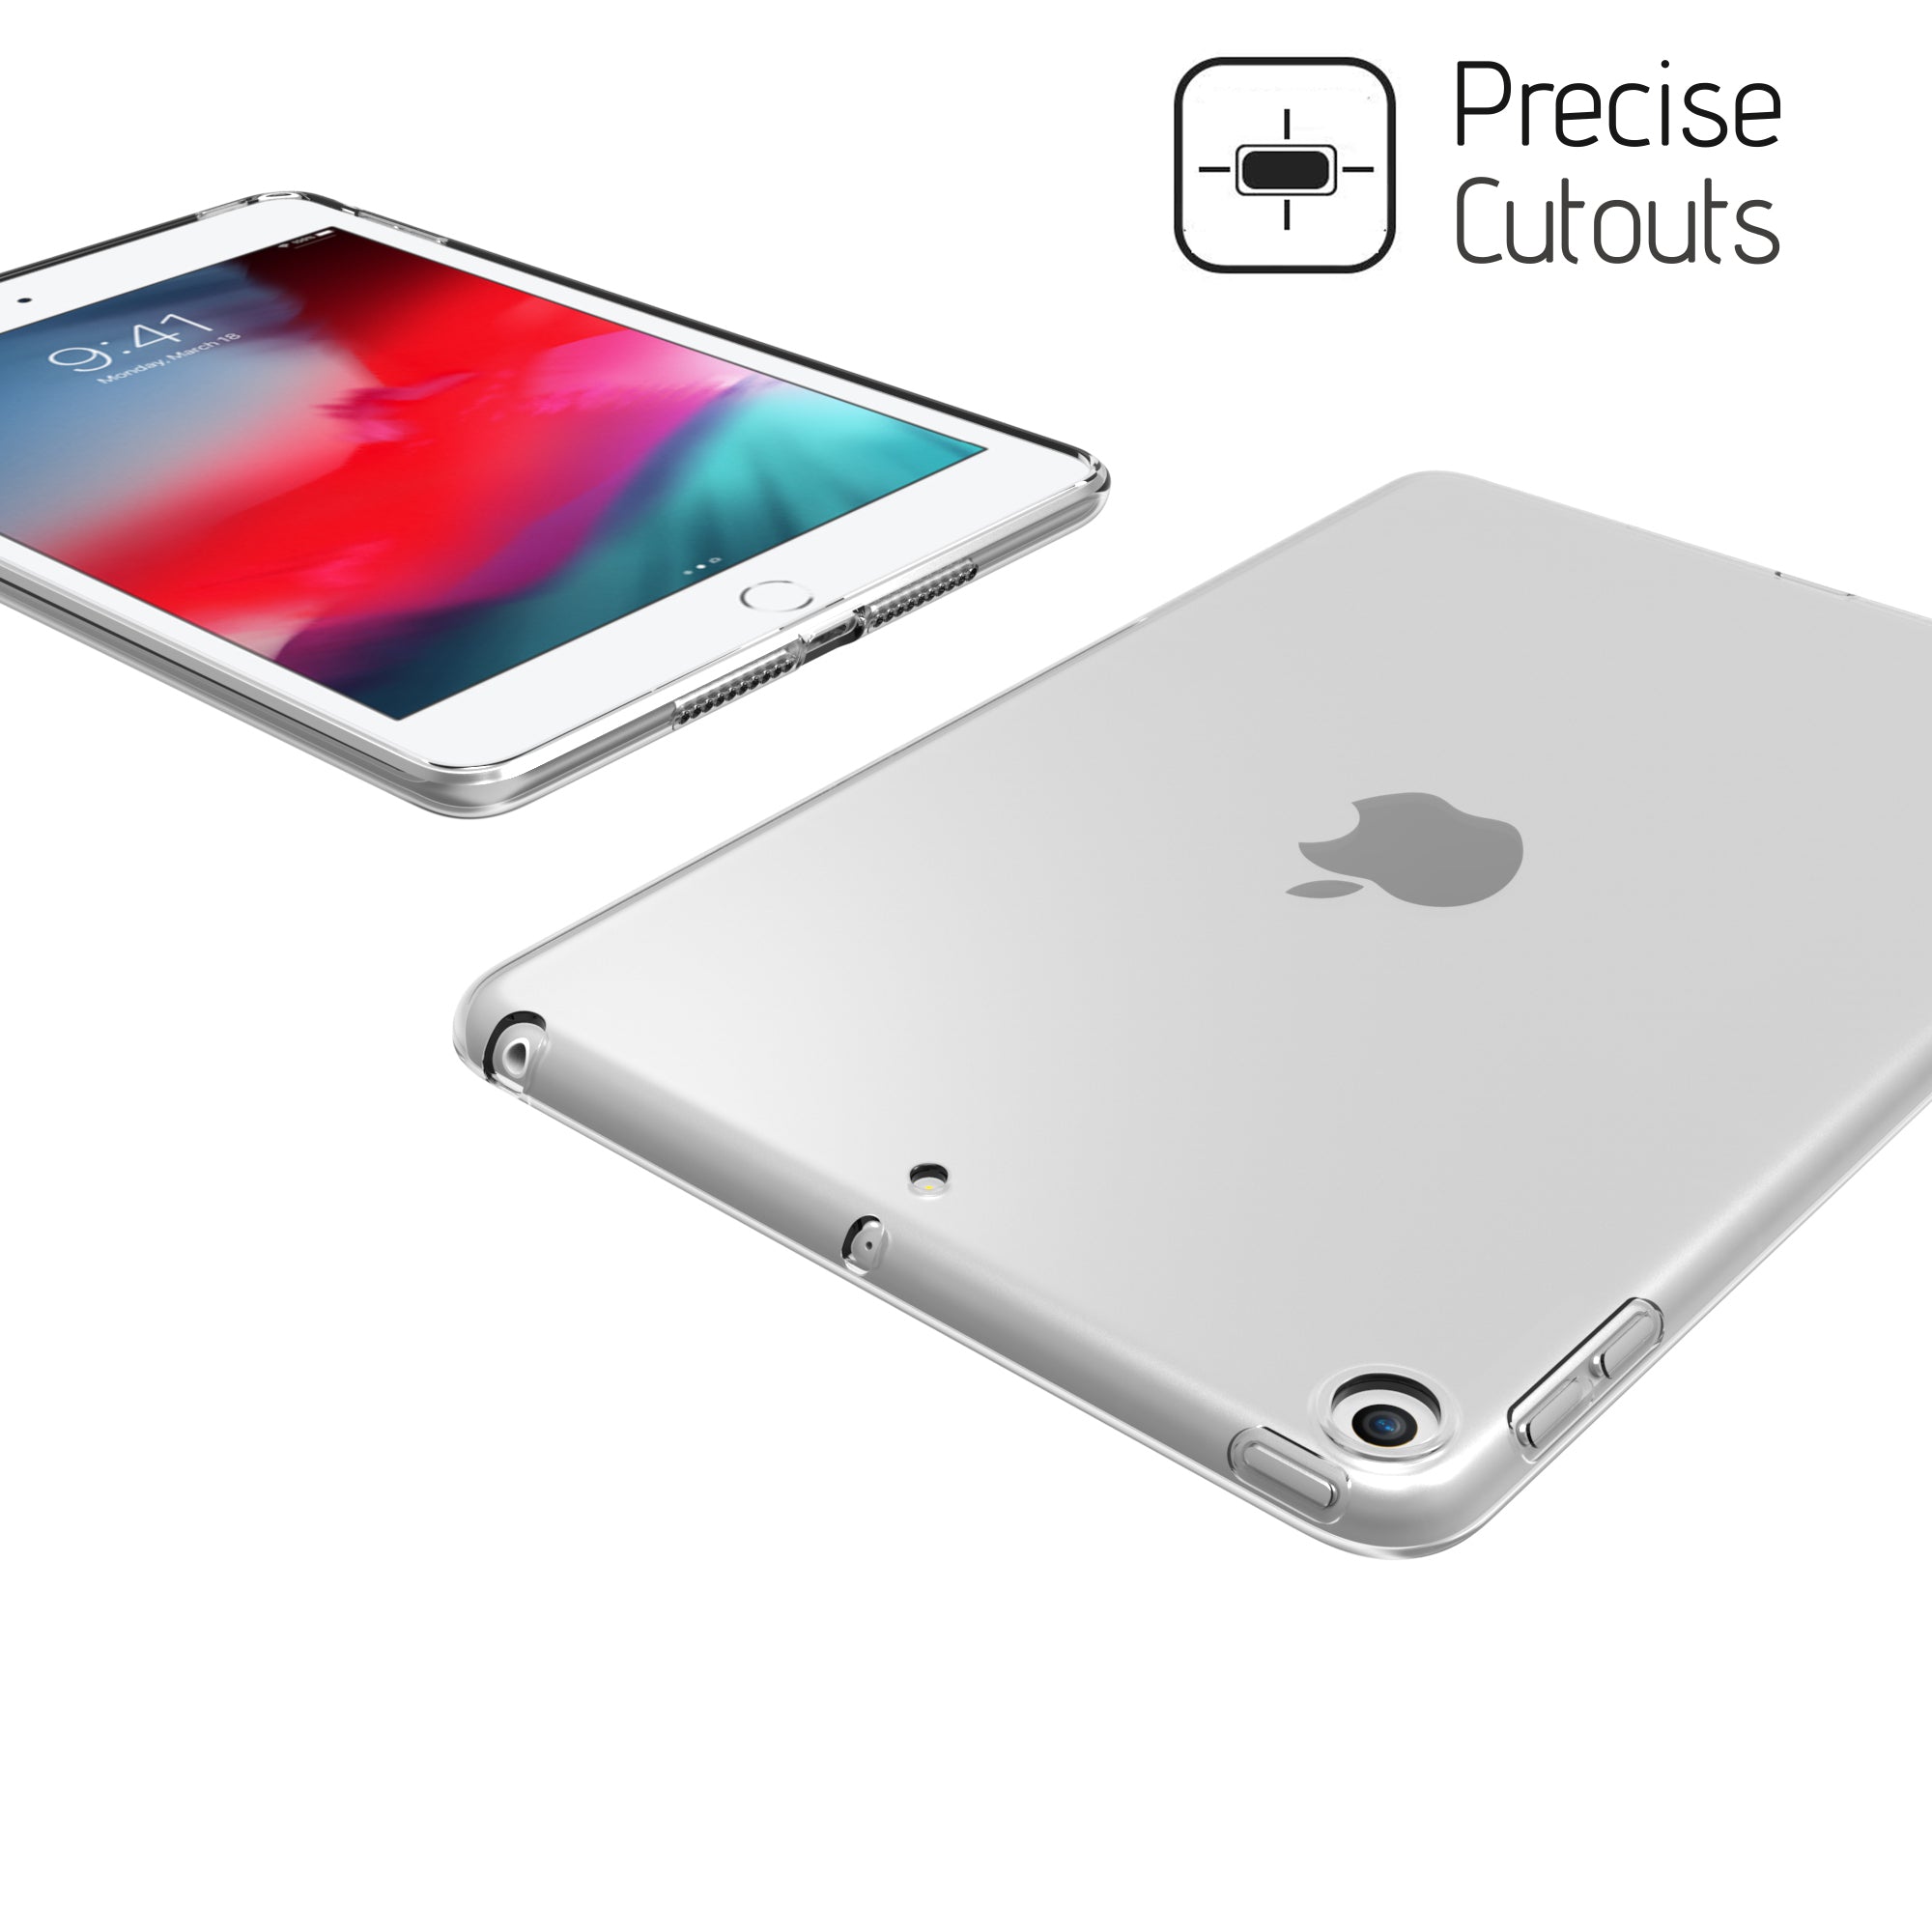 Luvvitt iPad Mini 5 Case 2019 CLARITY Flexible Light TPU Slim Cover - Clear